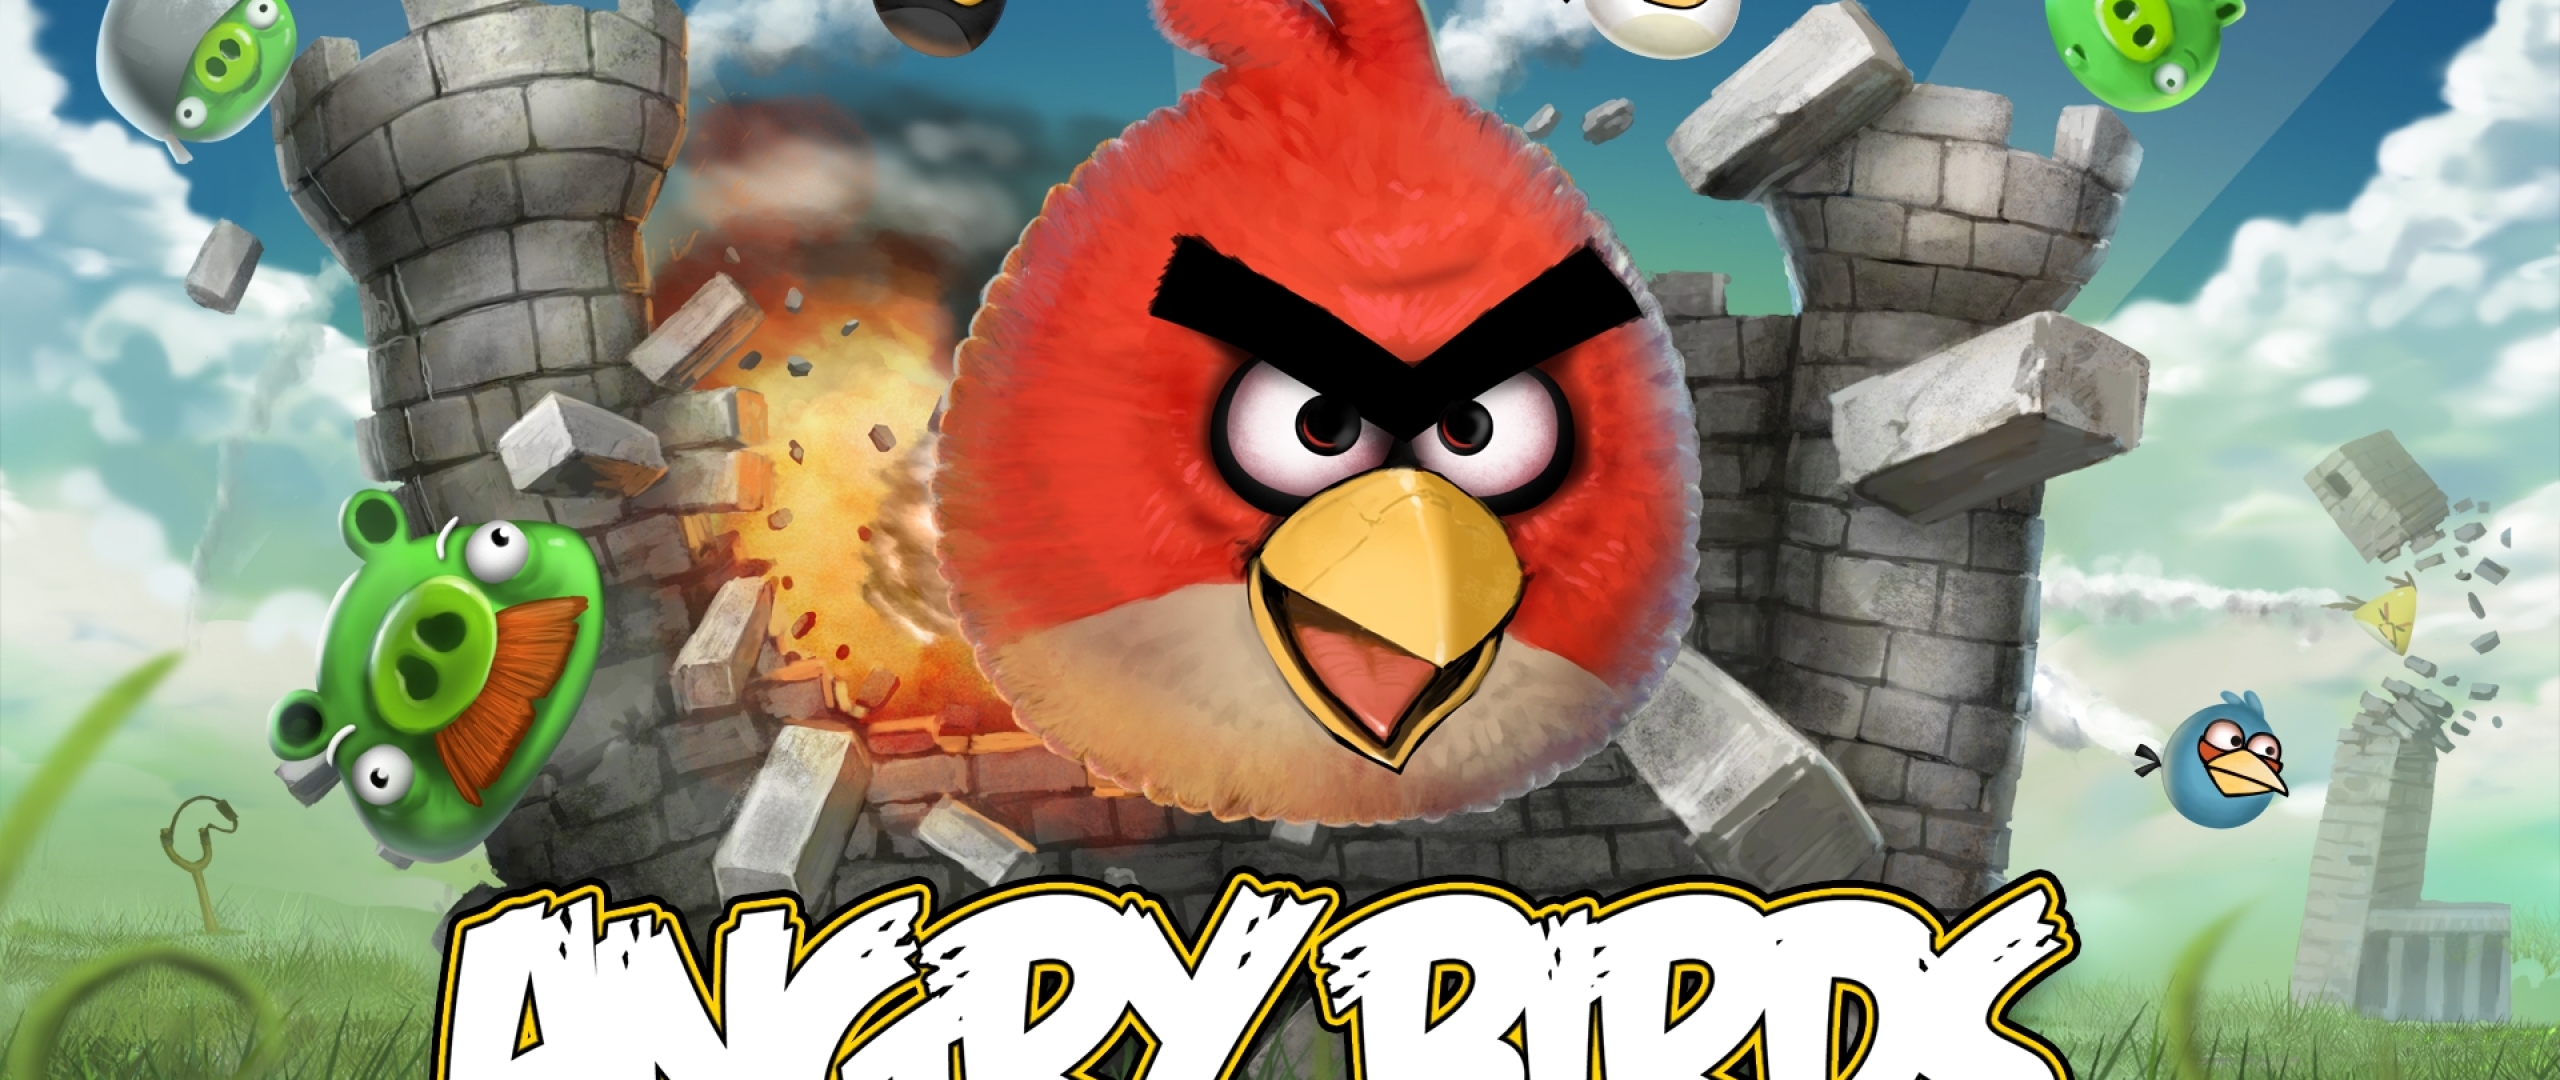 Angry birds 1 версия. Игра Angry Birds Classic. Энгри бердз игра первая версия. Angry Birds китайская версия. Игра Энгри бердз 2 злые птицы.